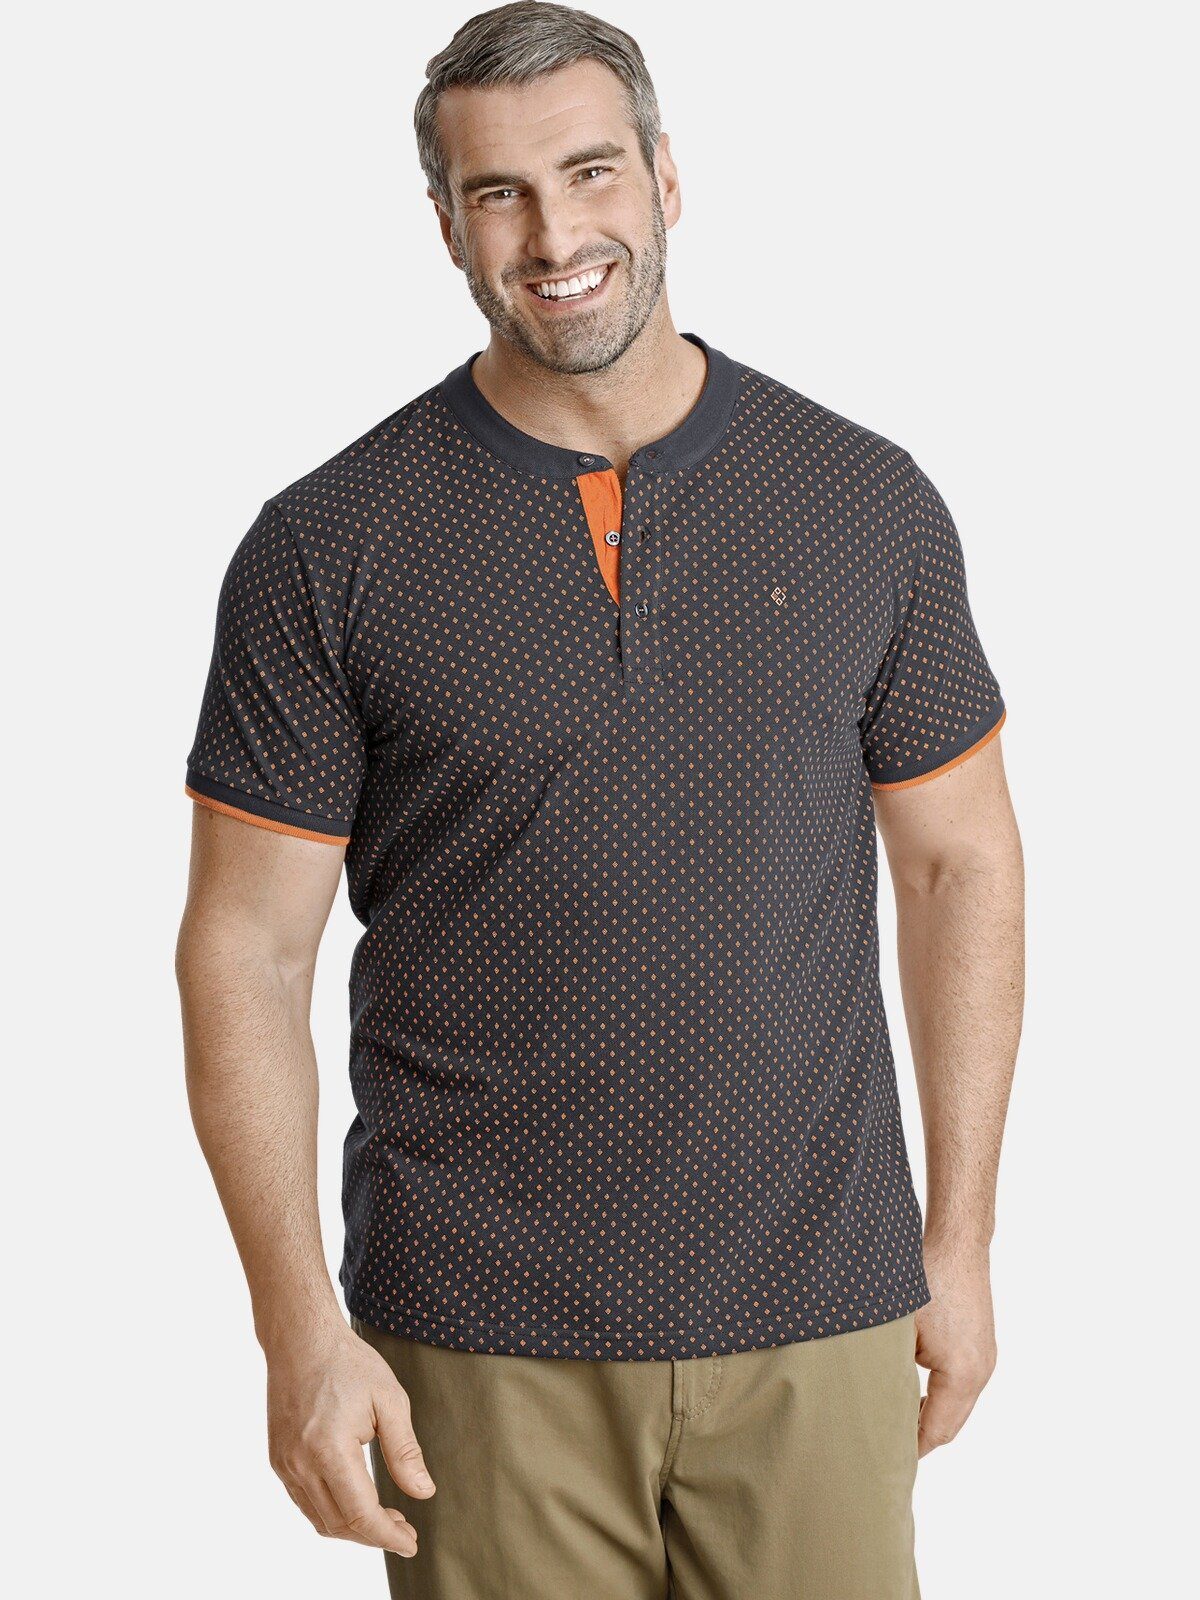 Charles Colby T-Shirt DUKE COLIN in minimal Rautendesign dunkelgrau